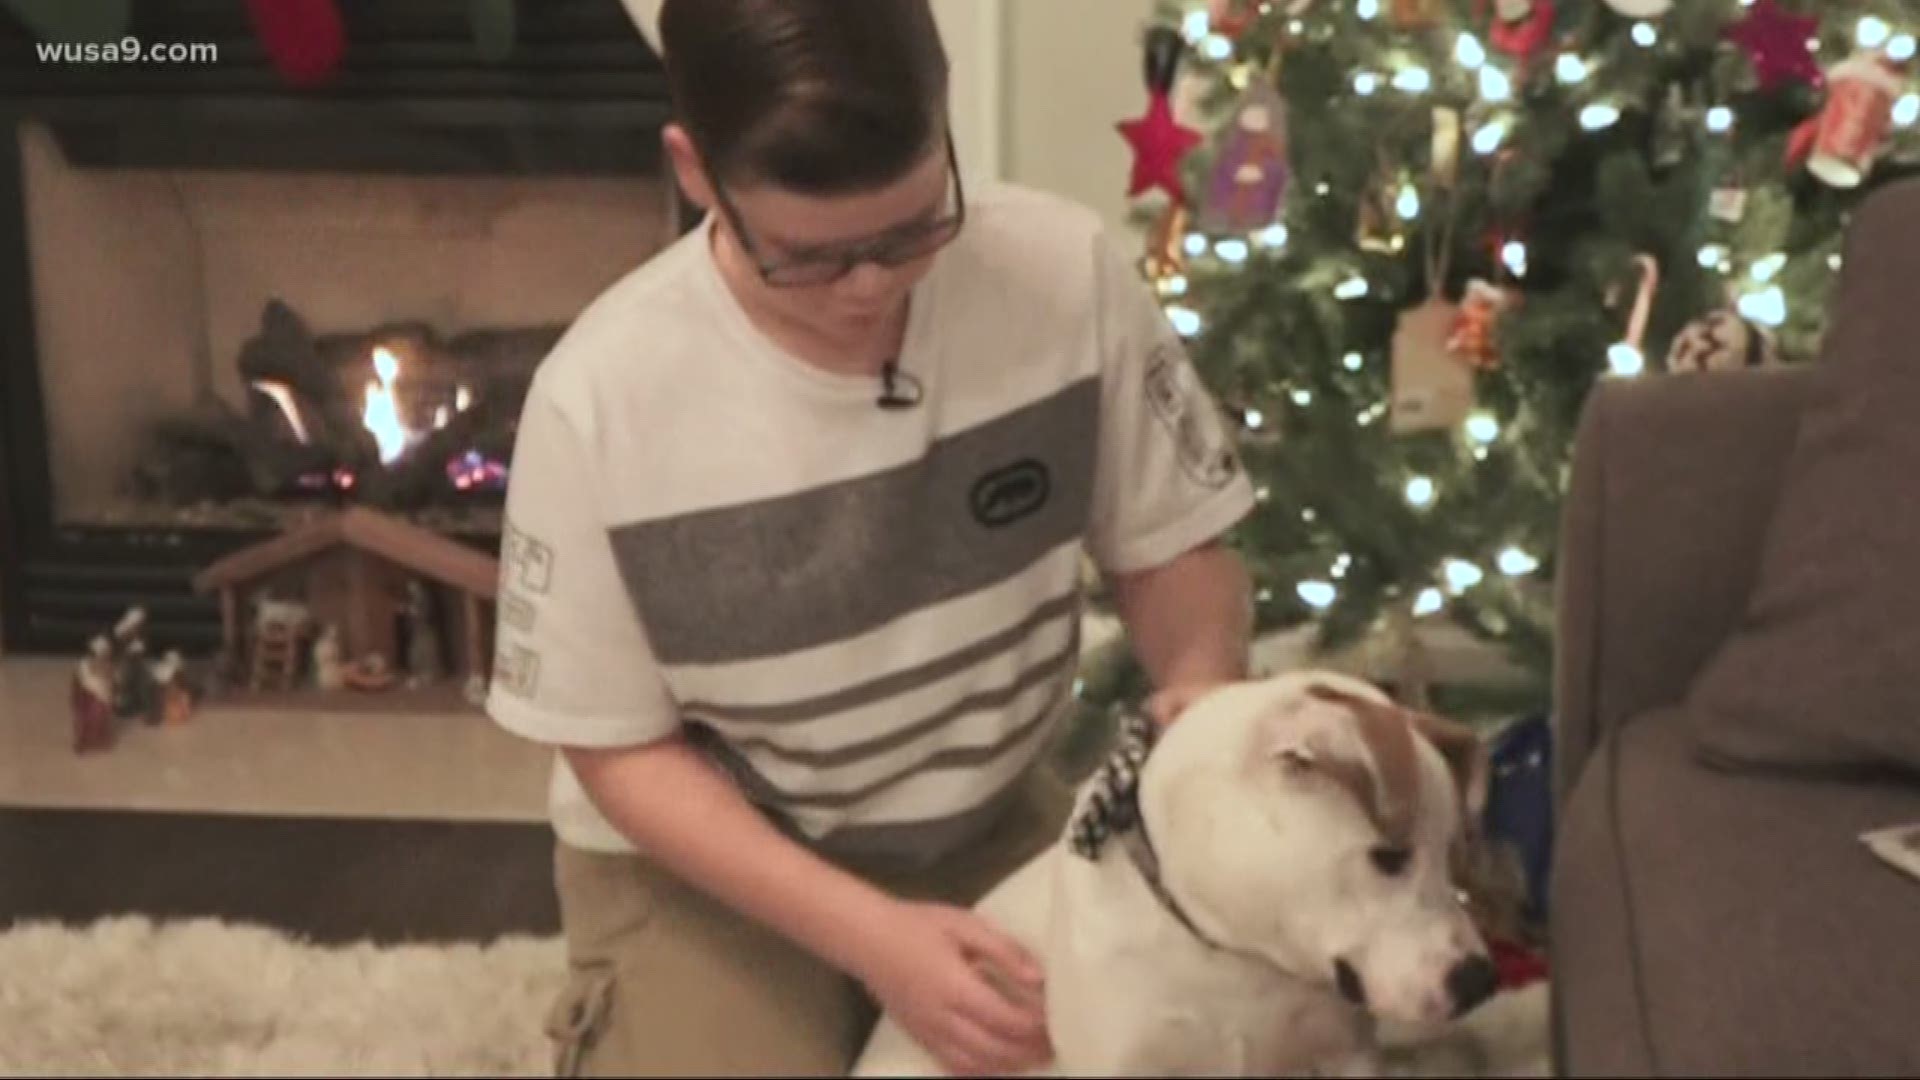 petco 3 legged dog christmas 2020 Three Legged Dog Helps Virginia Boy Cope With Bullying Wusa9 Com petco 3 legged dog christmas 2020